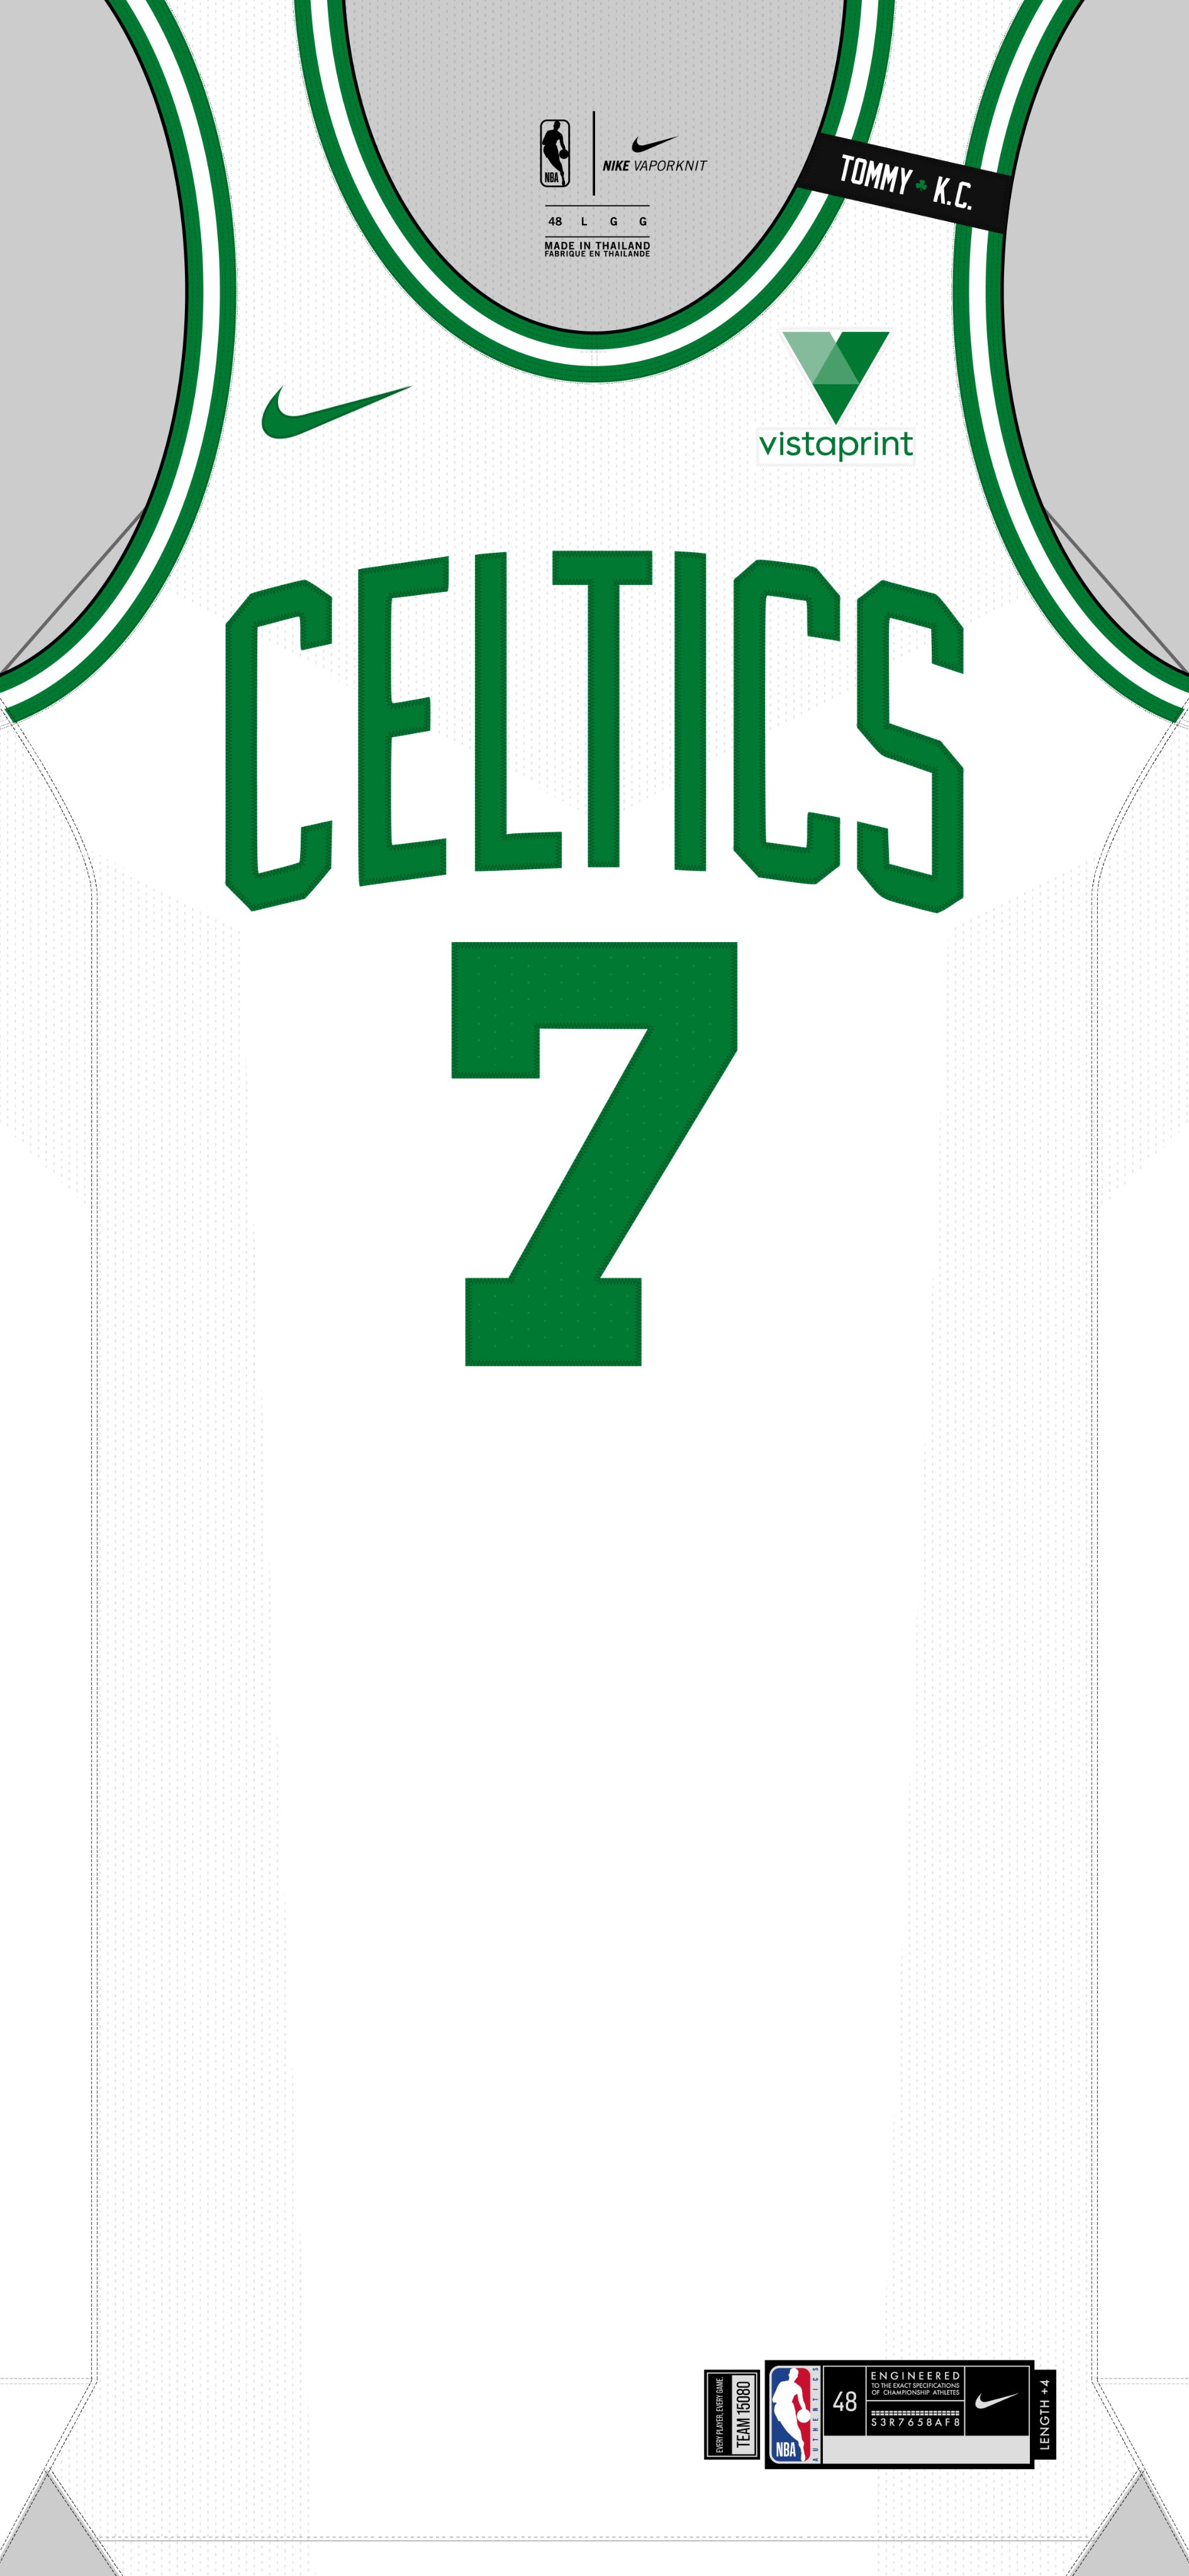 JAYSON TATUM No. 0 Patch - Boston Basketball Jersey Number Green